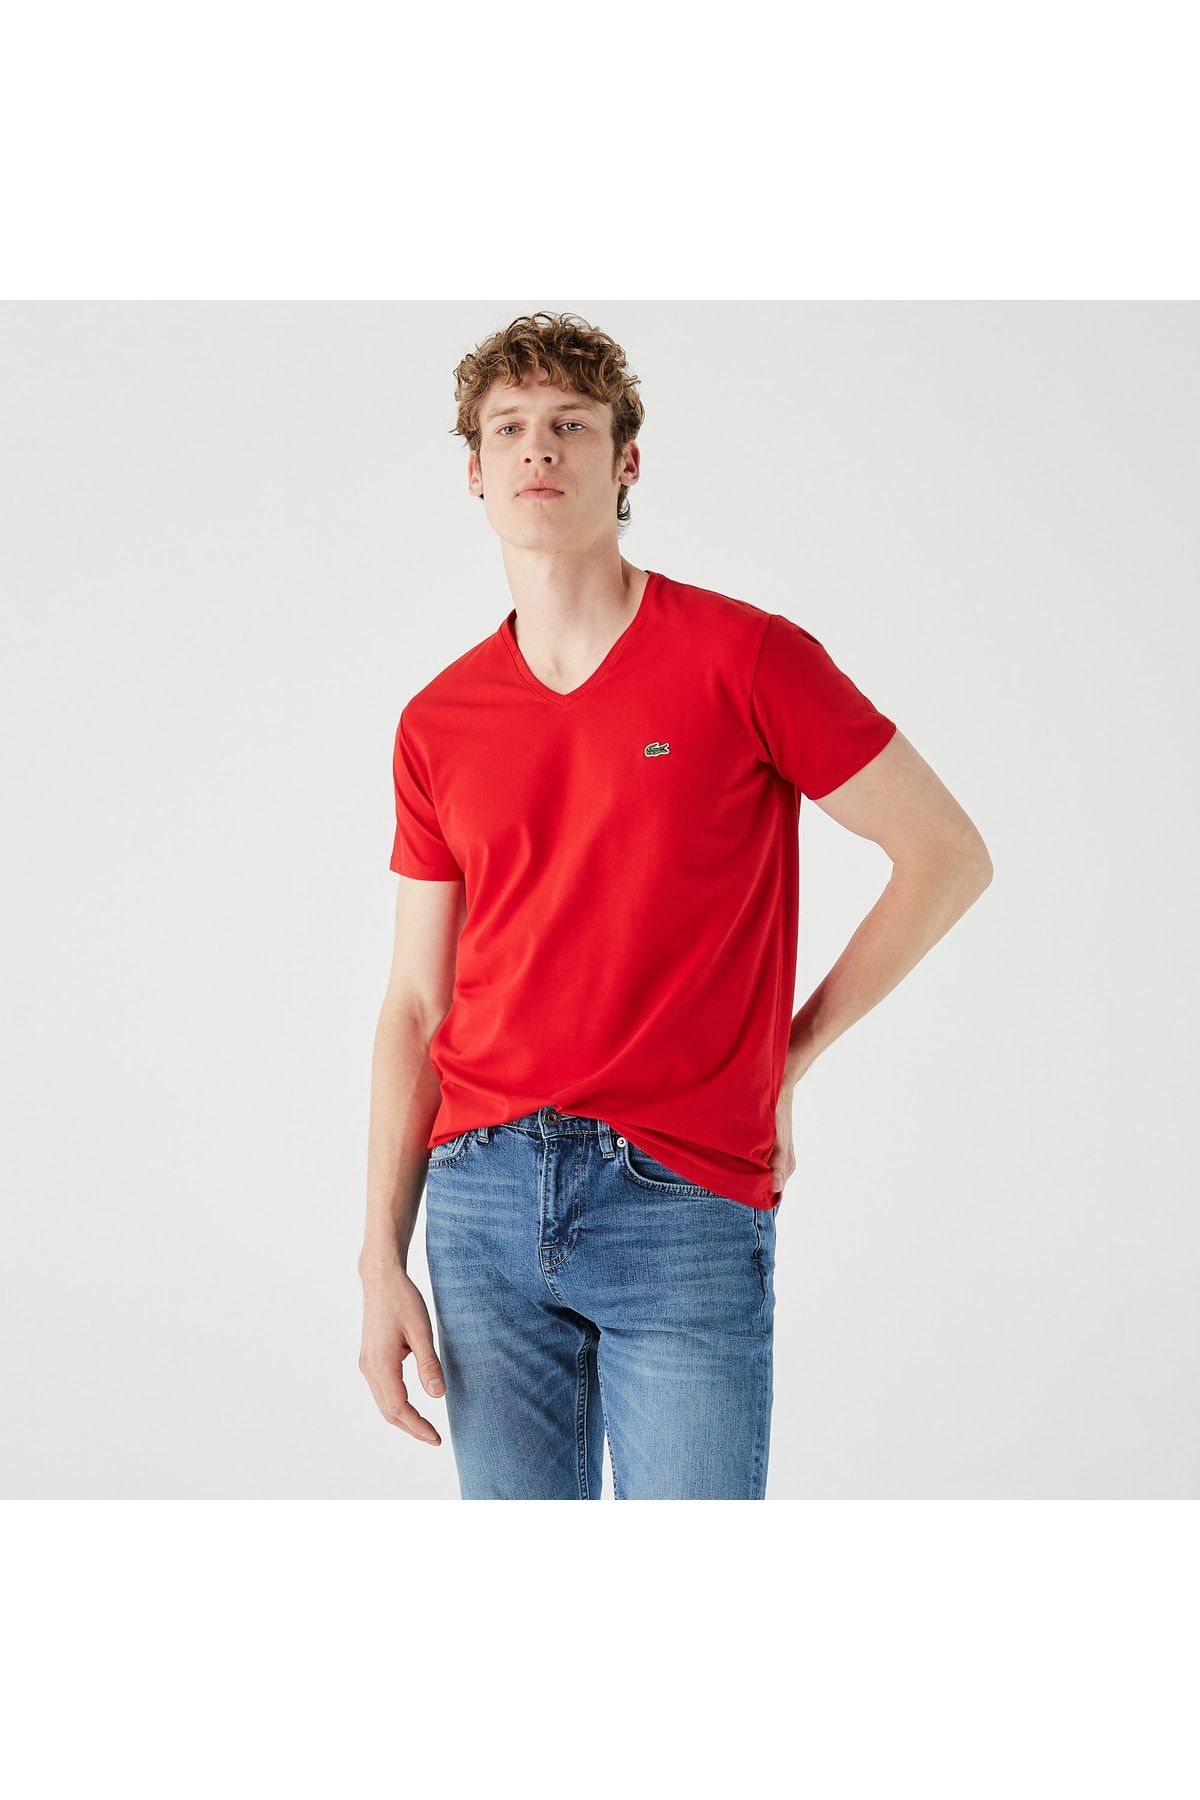 Lacoste تی شرت قرمز V- گردن باریک مردان